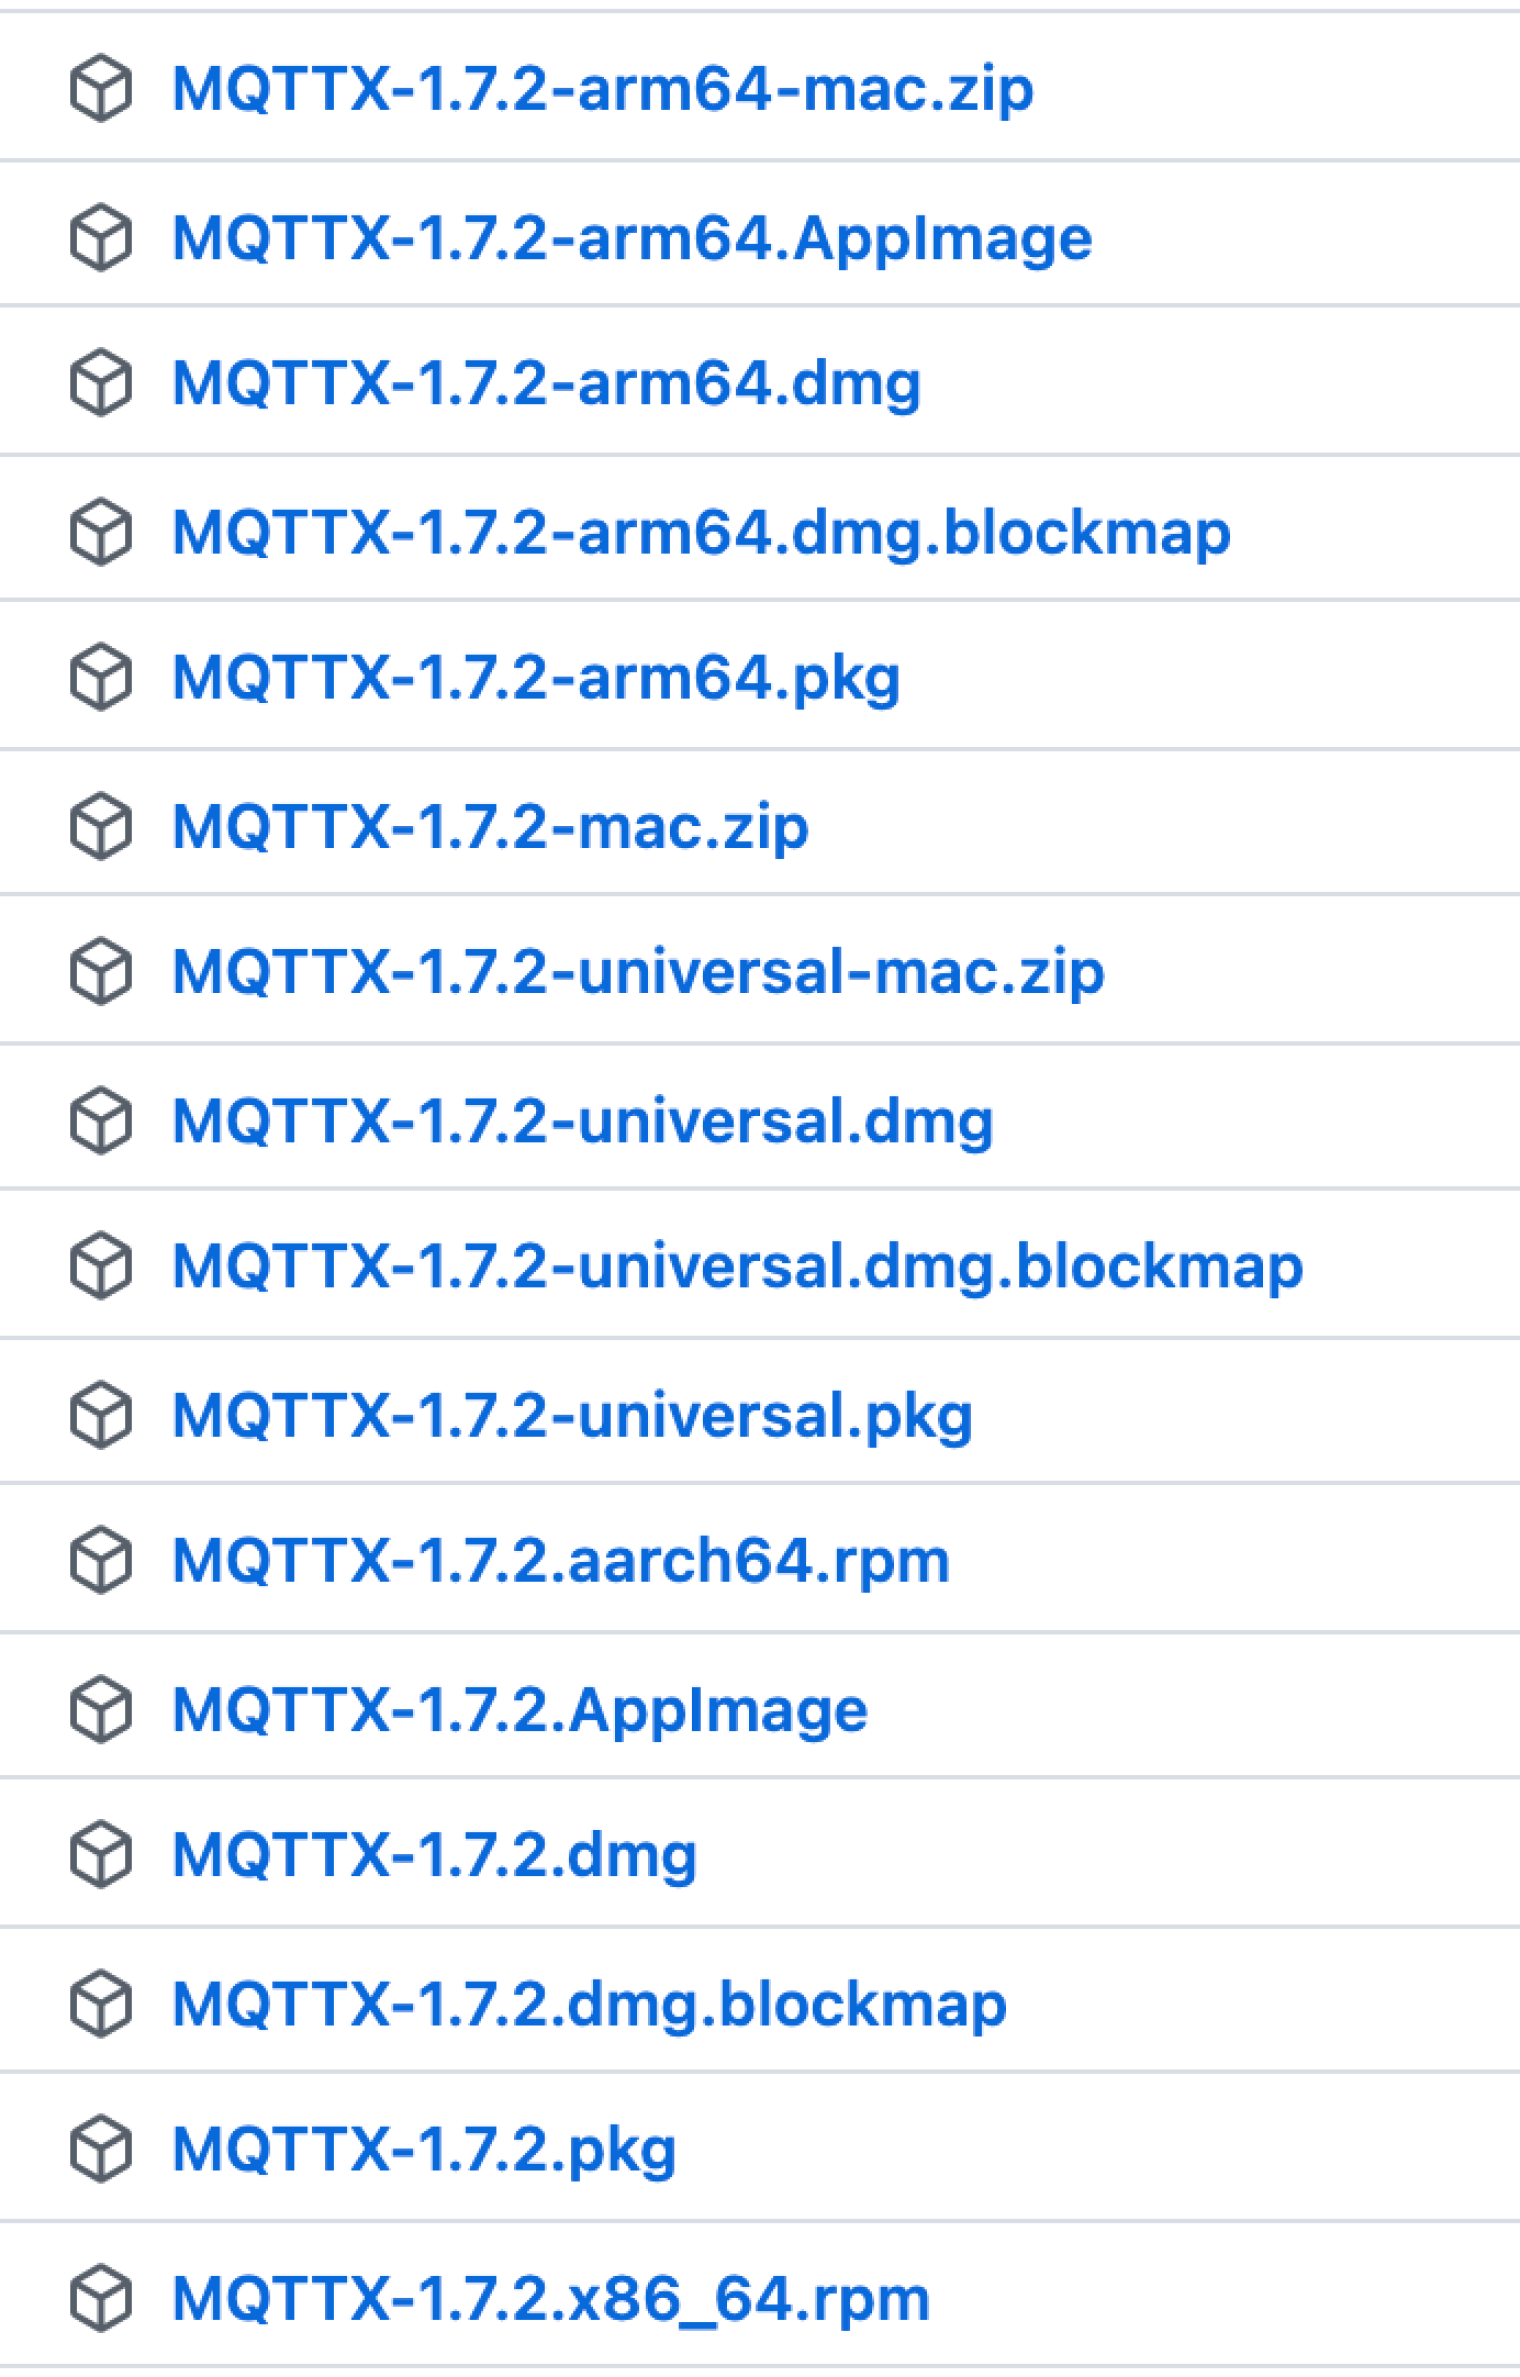 MQTT X add more ARM builds